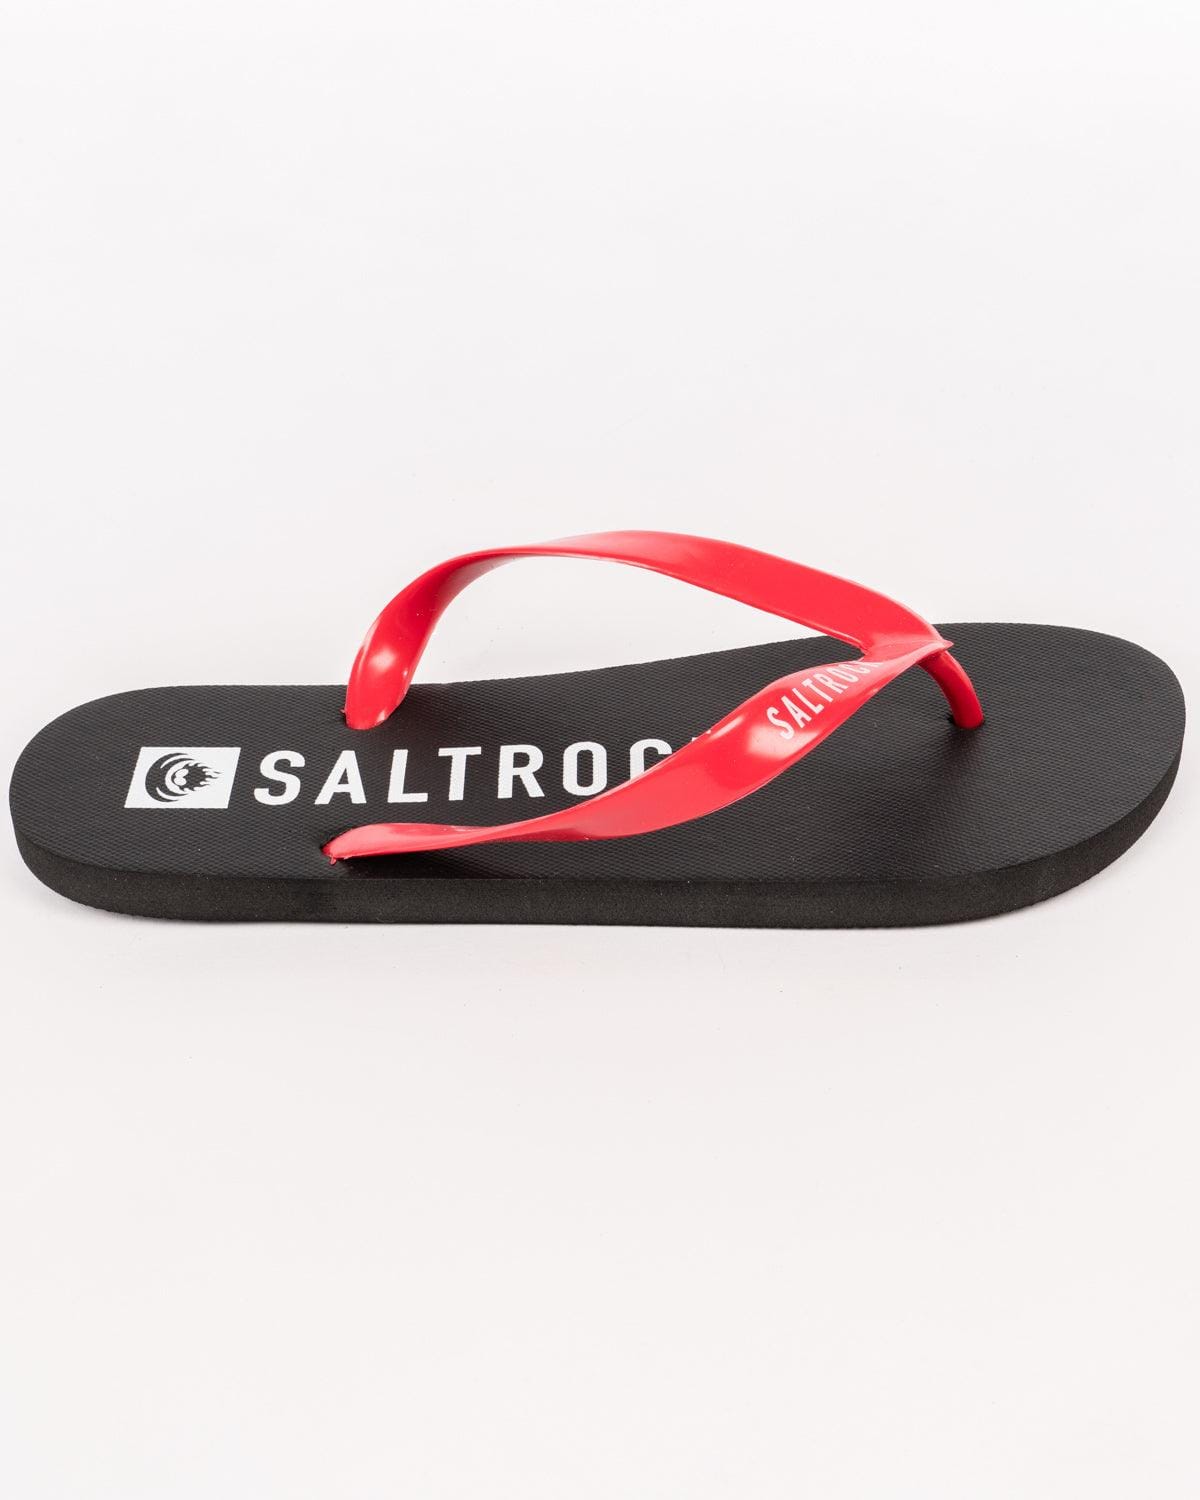 Corp - Unisex Flip Flops - Saltrock